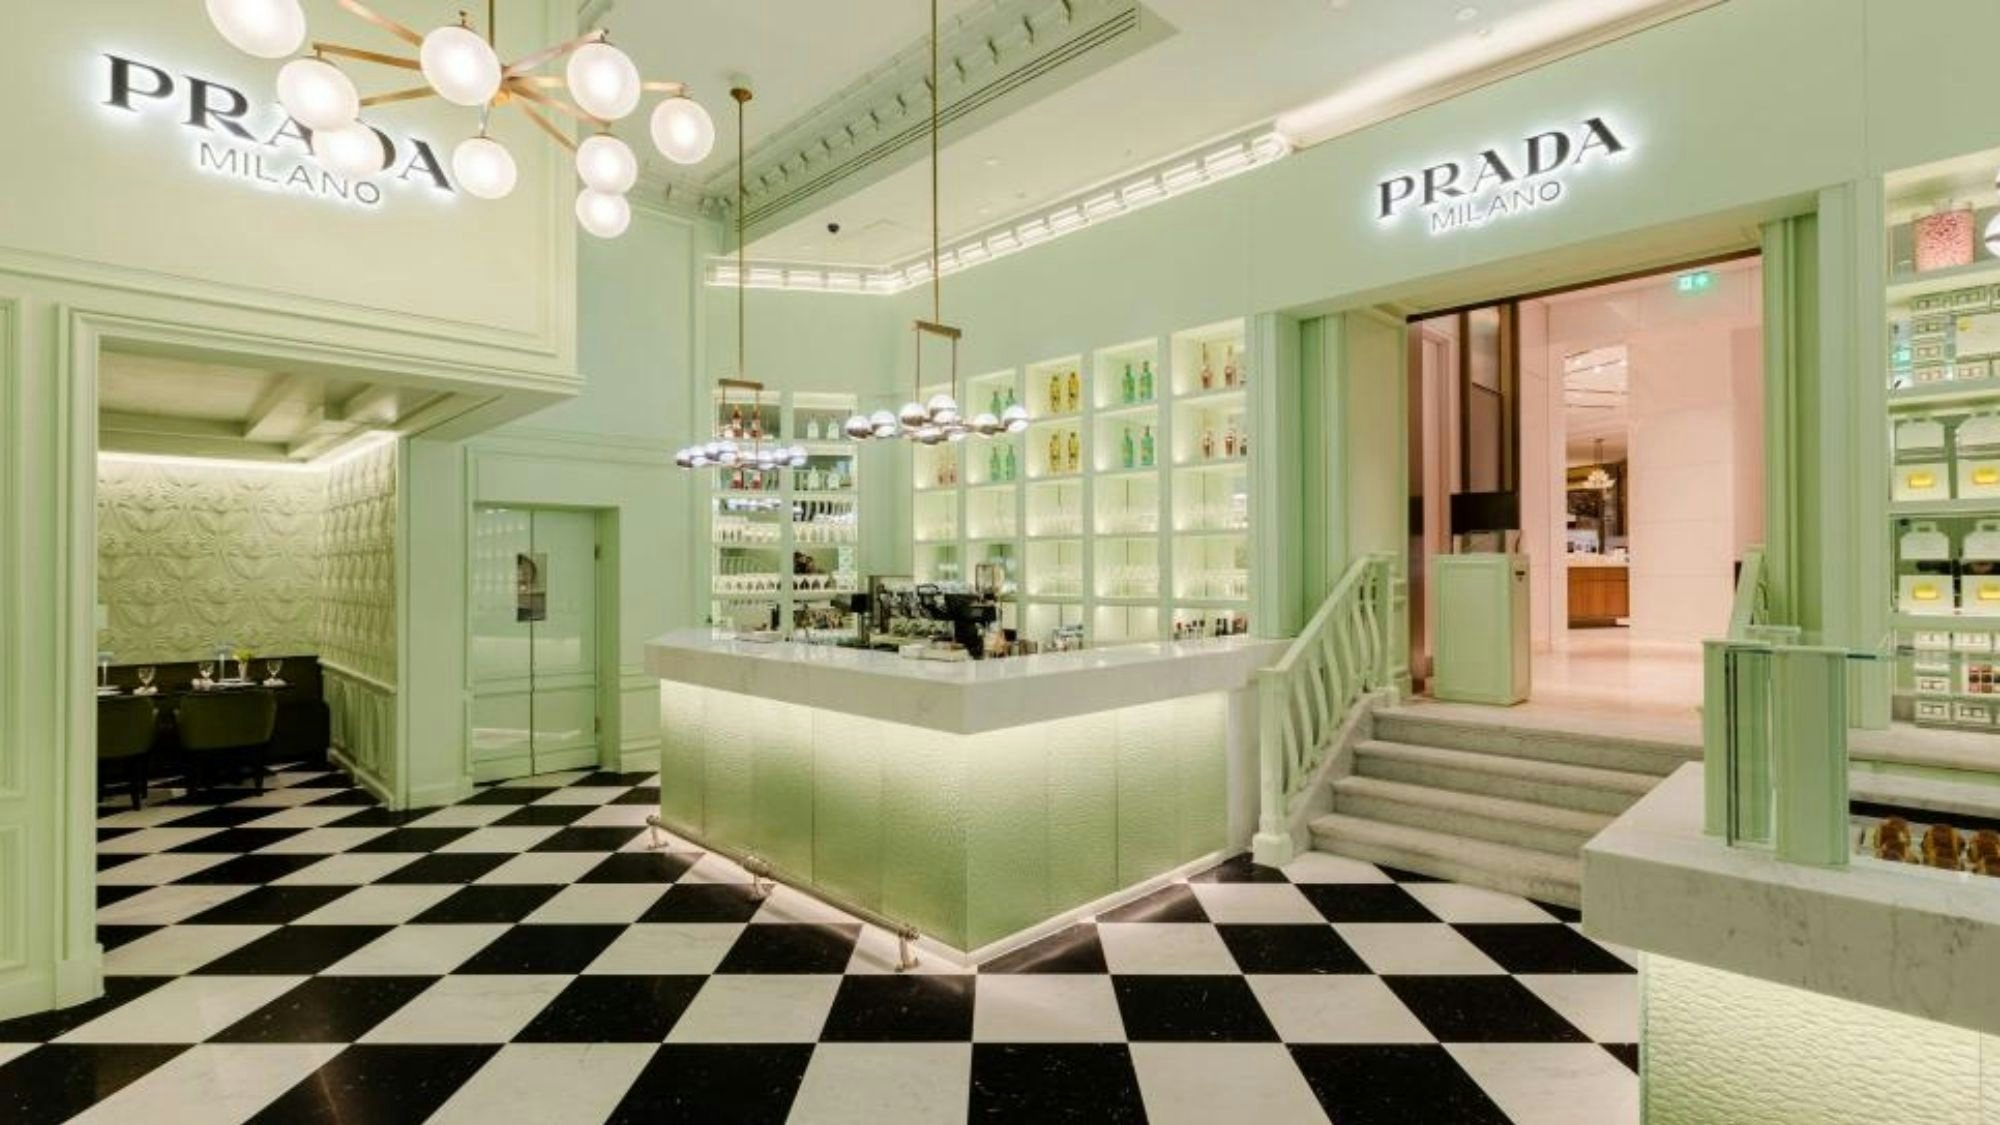 Prada has opened a cafe at London's Harrods store. Photo: Prada